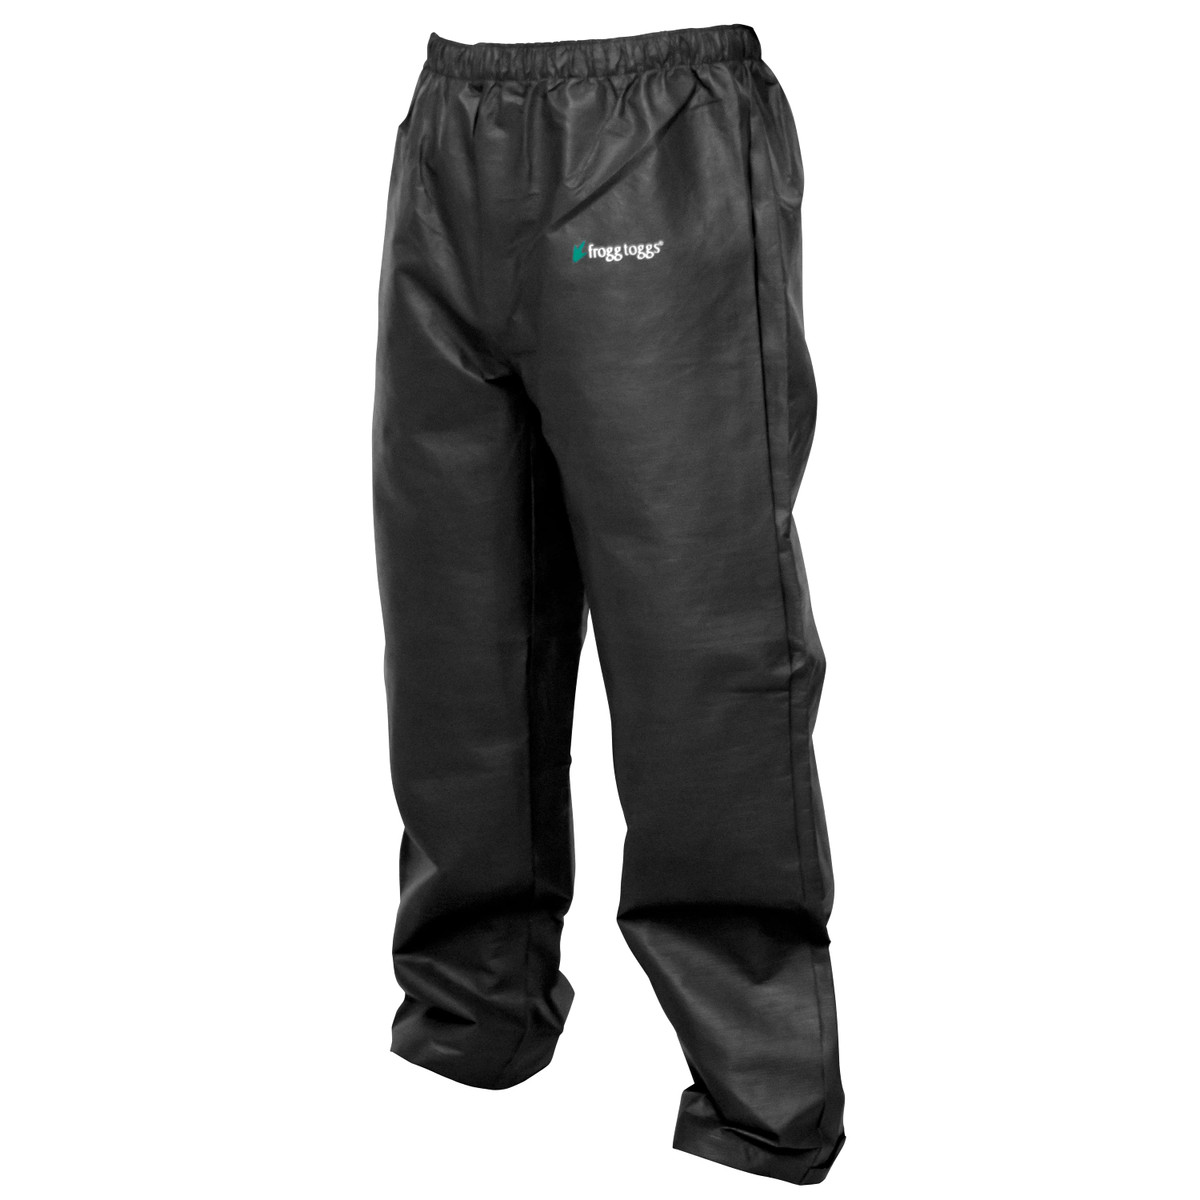 Frogg Toggs PL12140-01M/L Pro Lite Rain Suit, M/L, Black, Adjustable Collar, Zipper Closure - 3